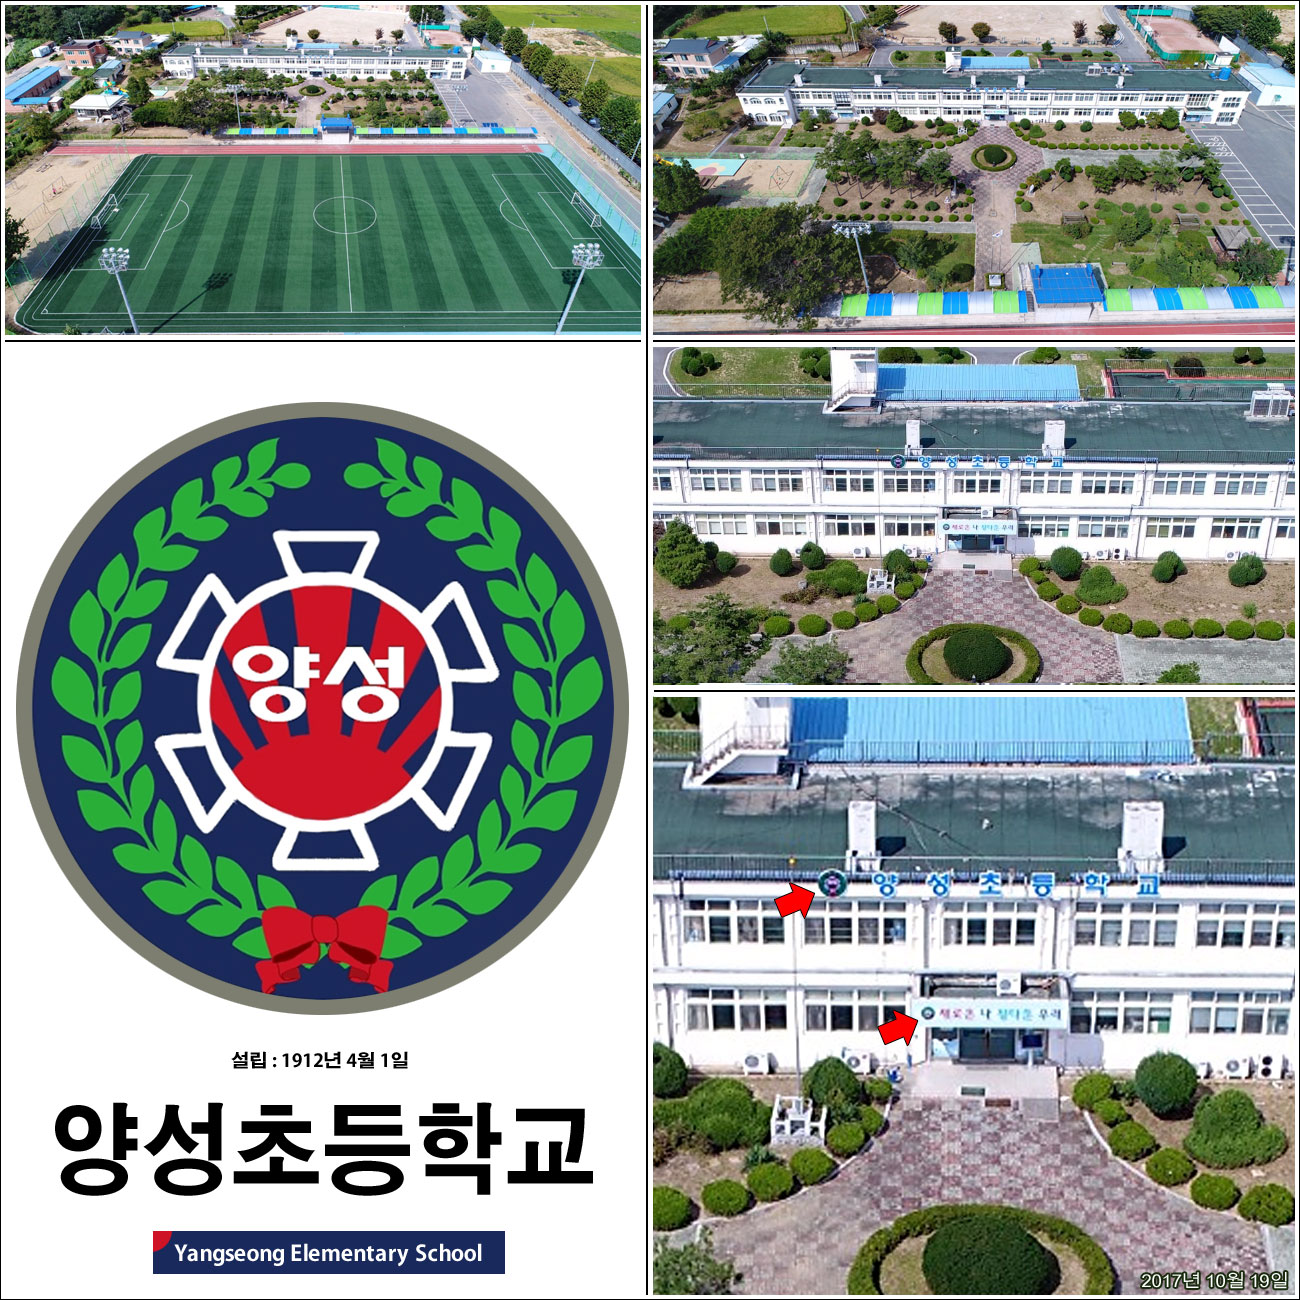 安城養成小学校（안성 양성초등학교）の校章, Yangseong Elementary School, Rising Sun 旭日旗